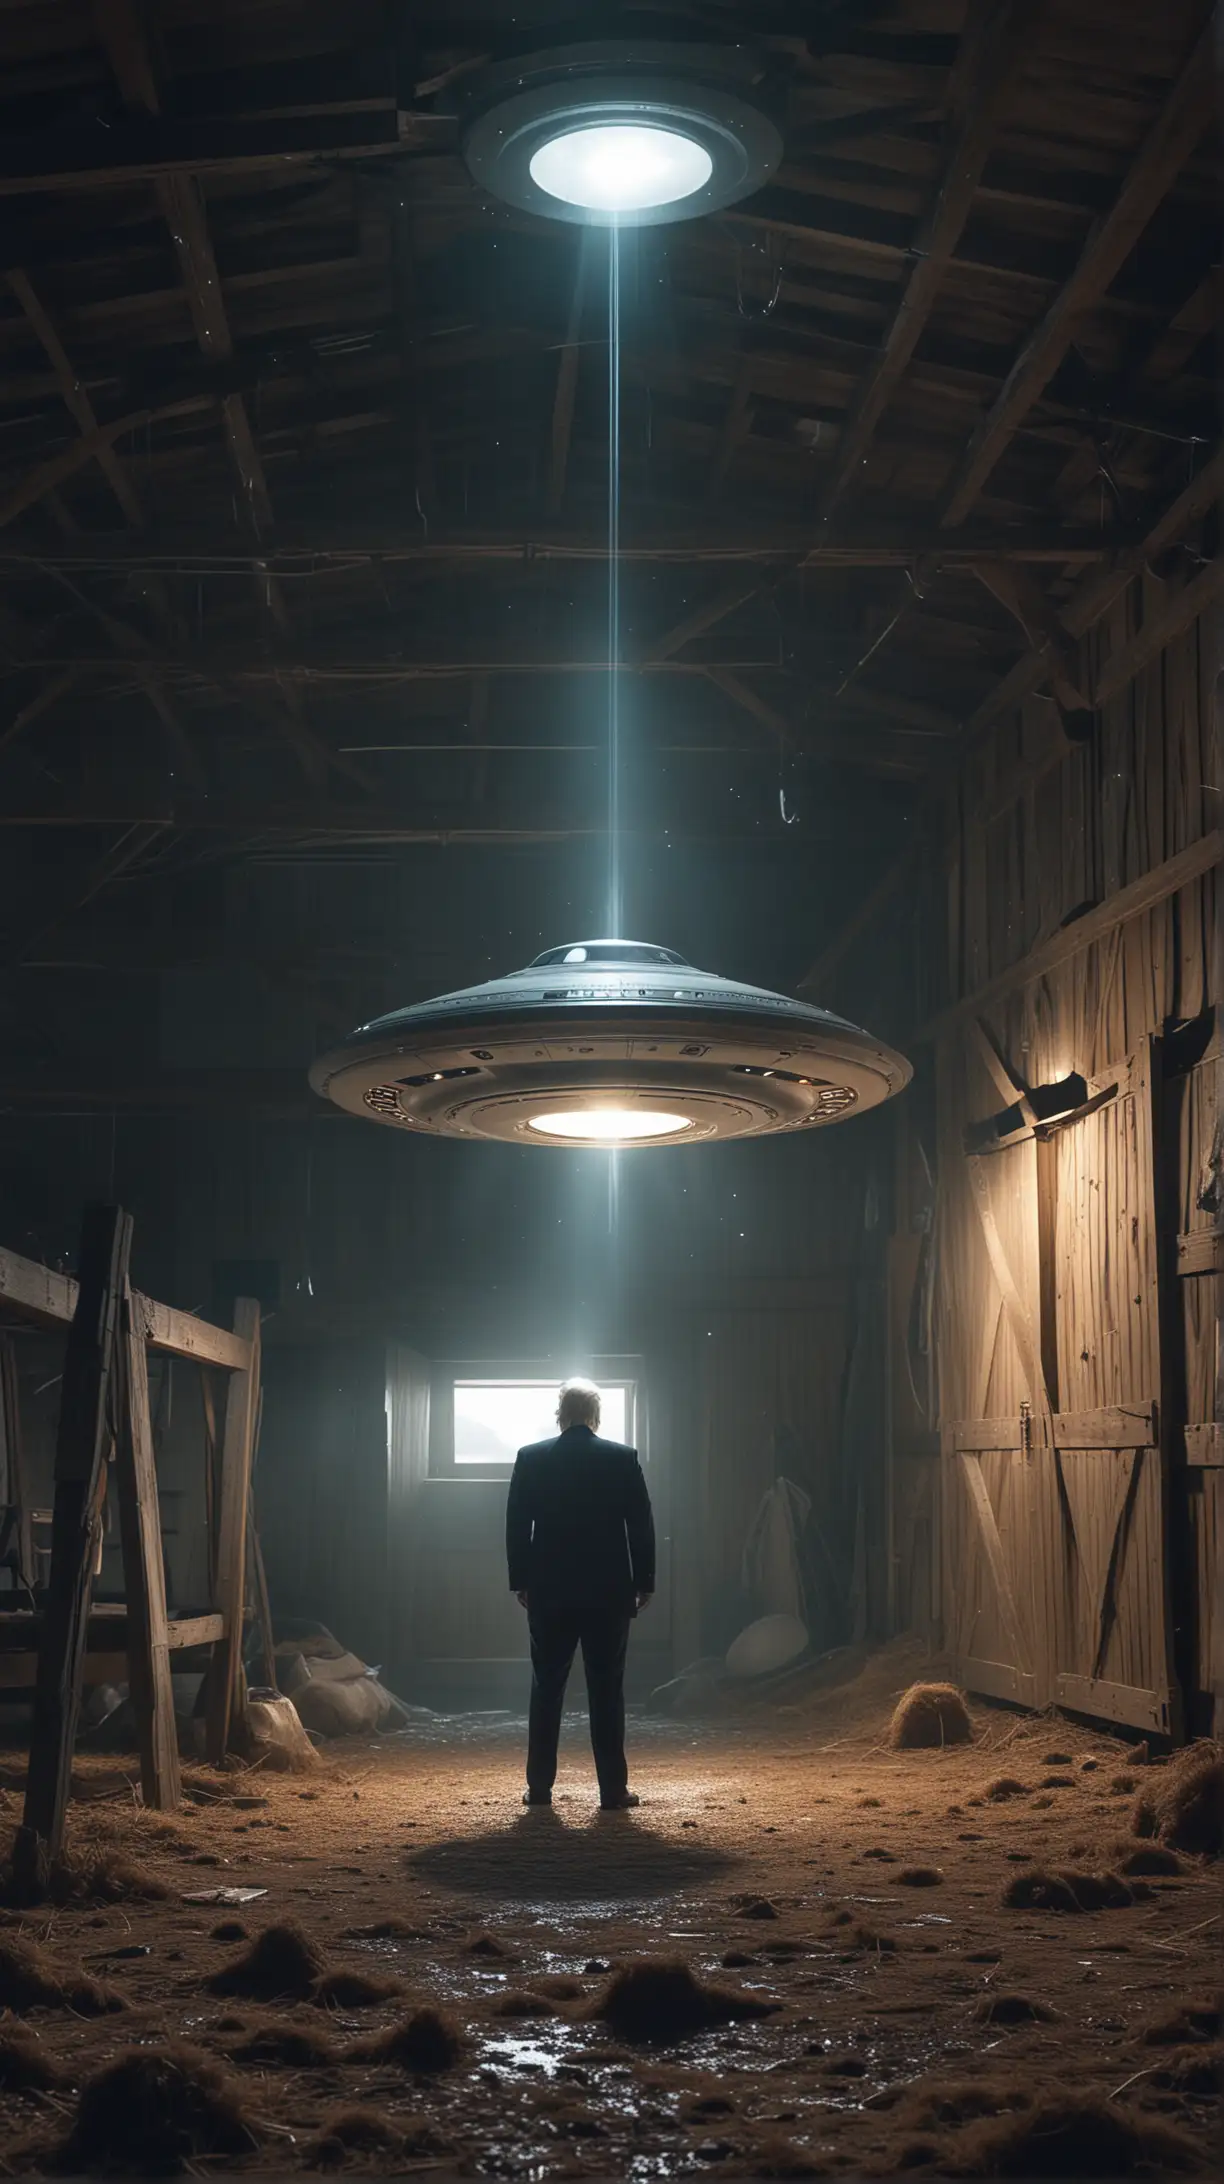 Secretive Encounter President Trump Concealing UFO in Barn